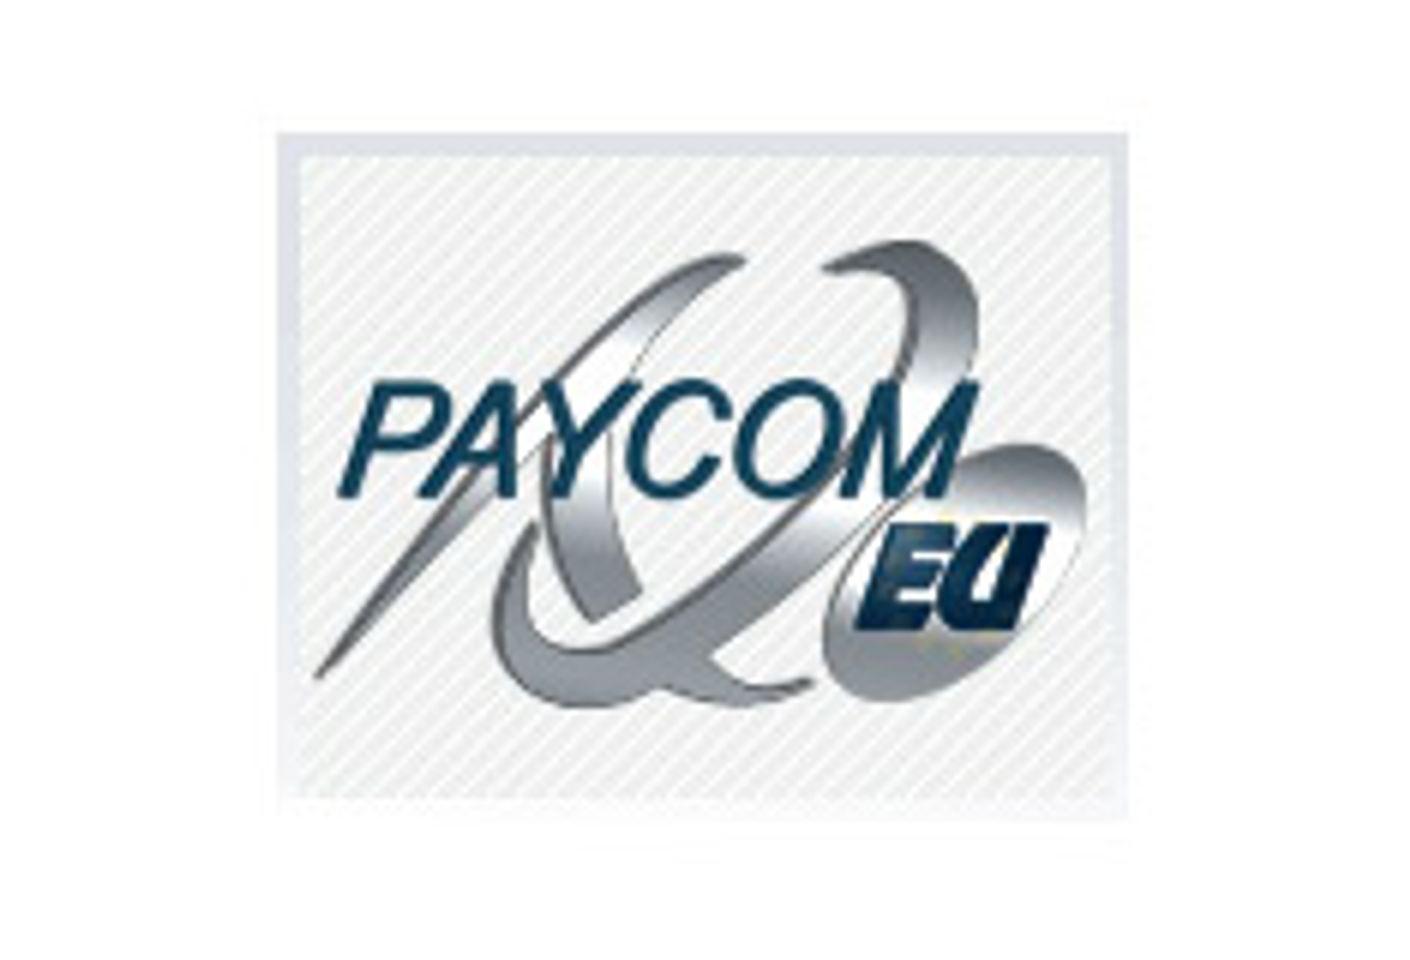 Paycom Launches European Union Division